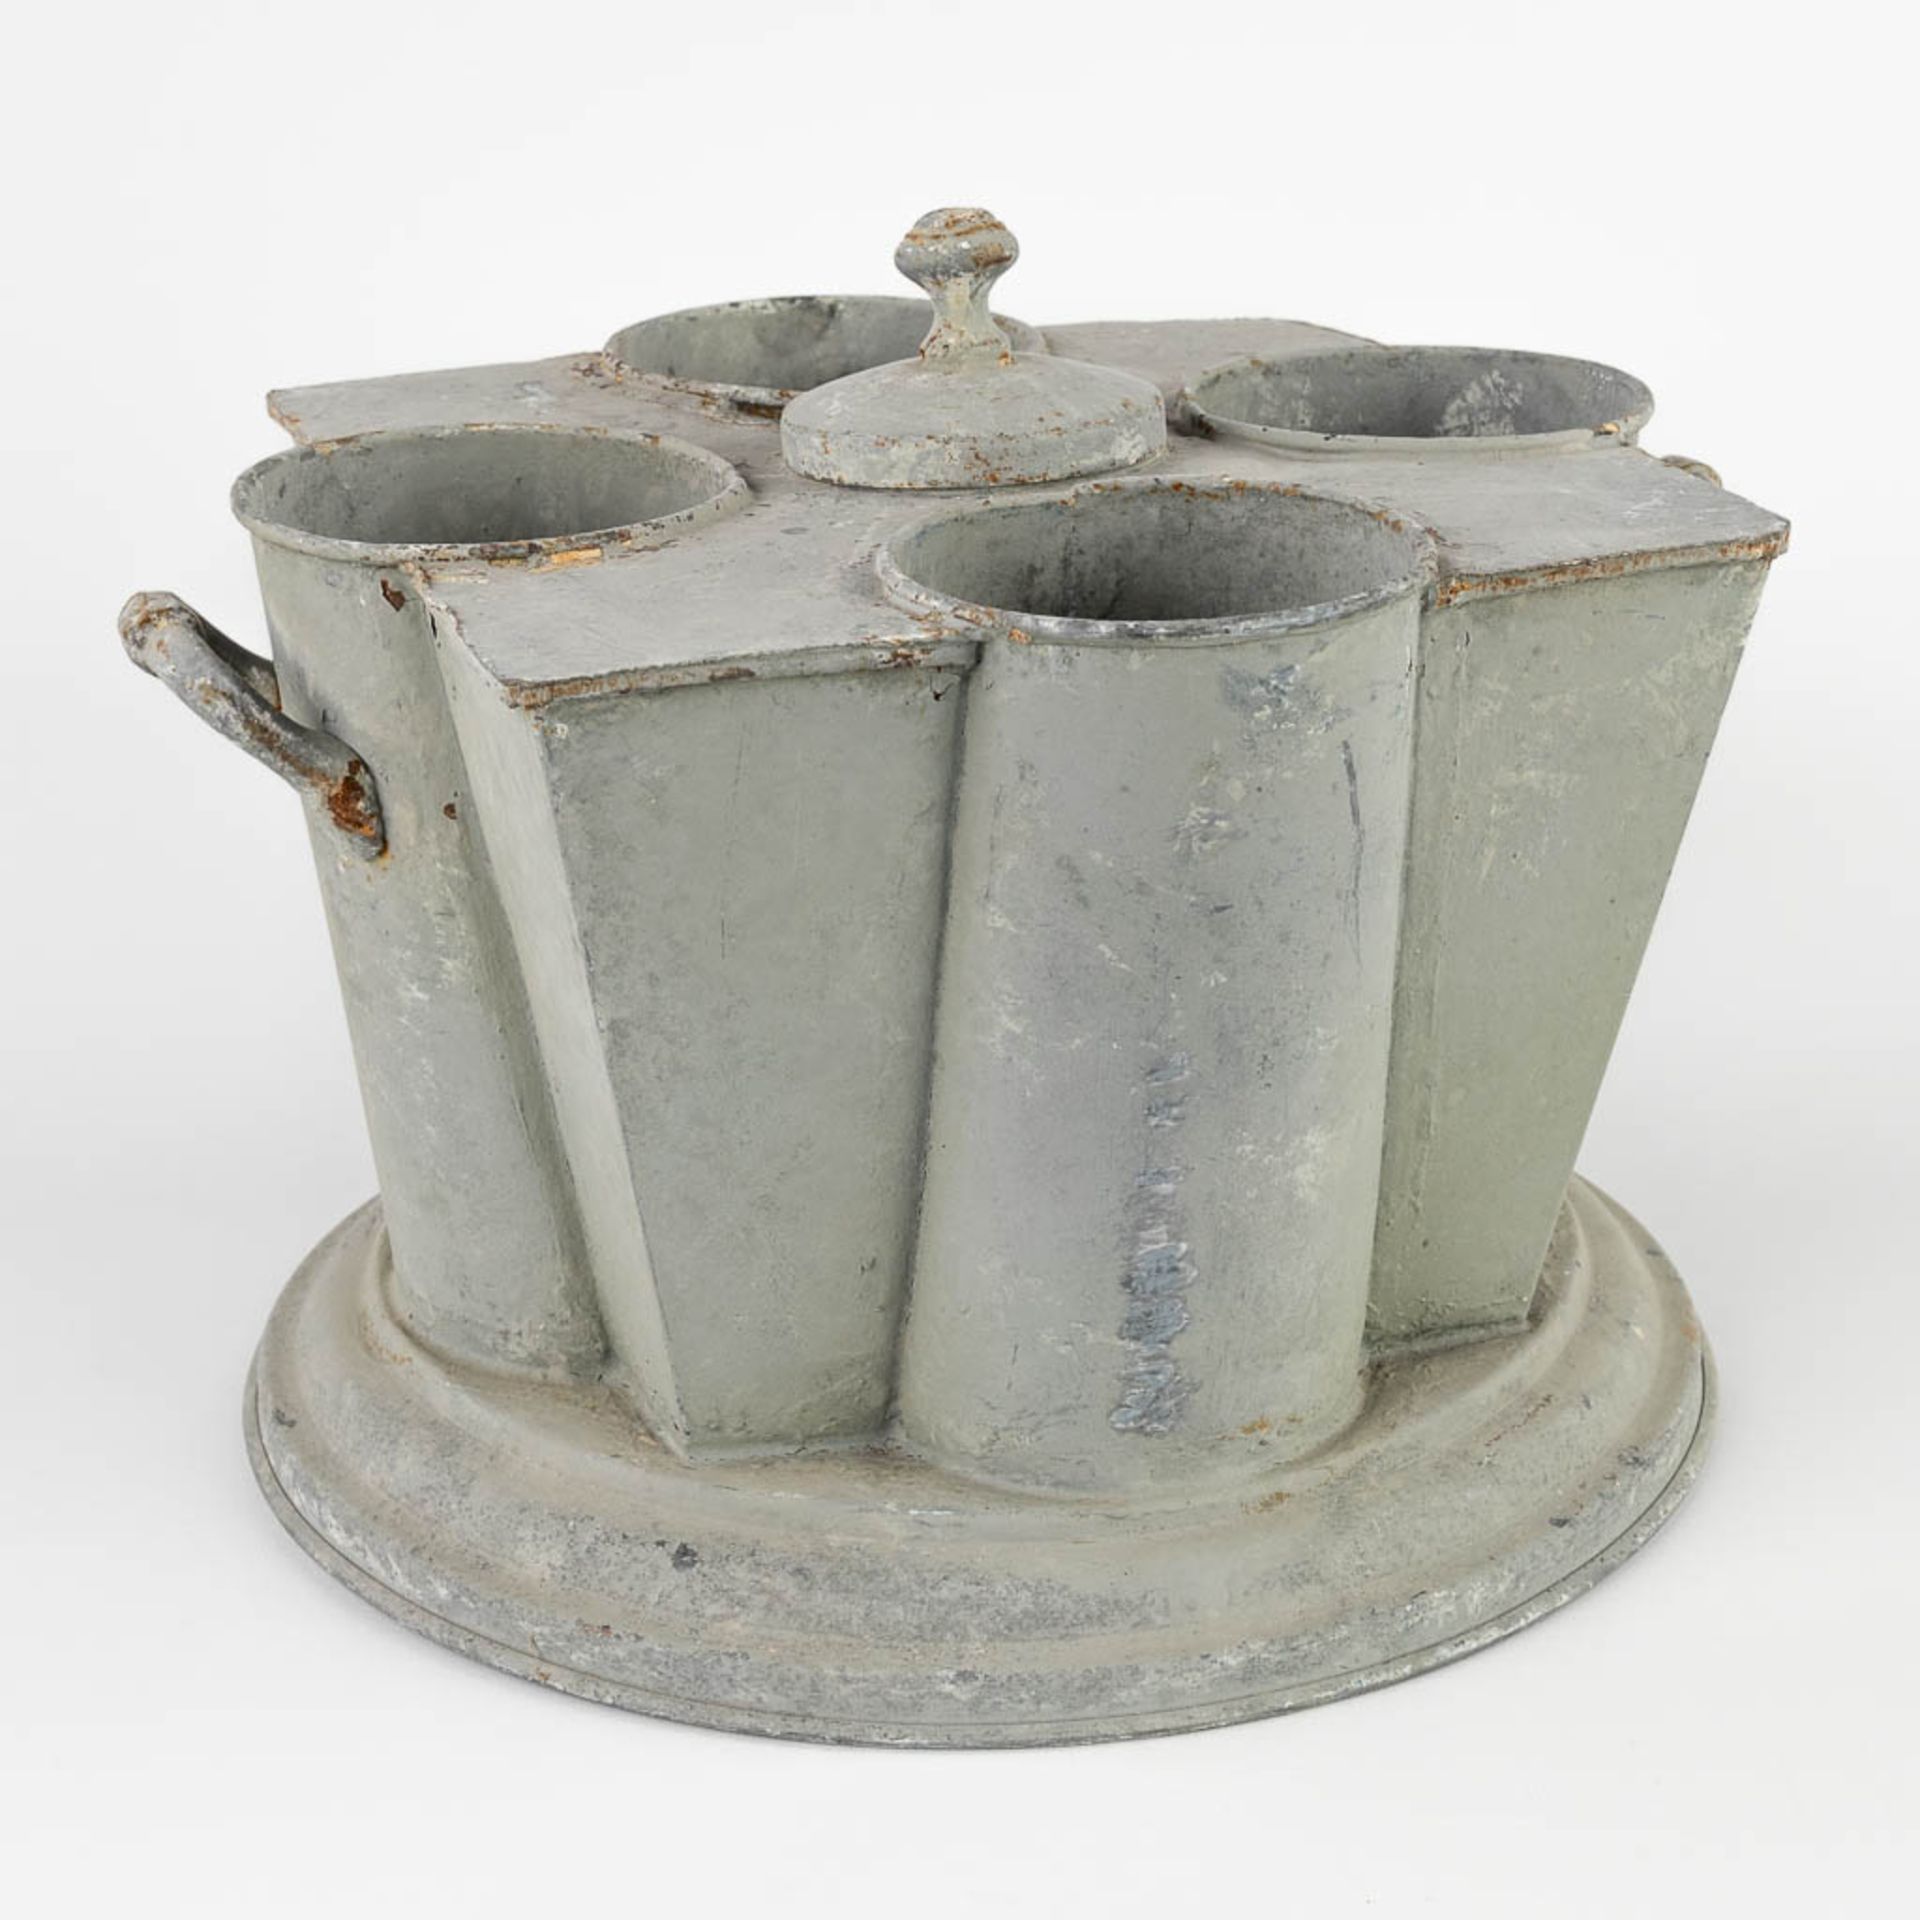 An antique wine cooler, made of zinc. (W:33 x H:25 x D:31 cm) - Image 3 of 13